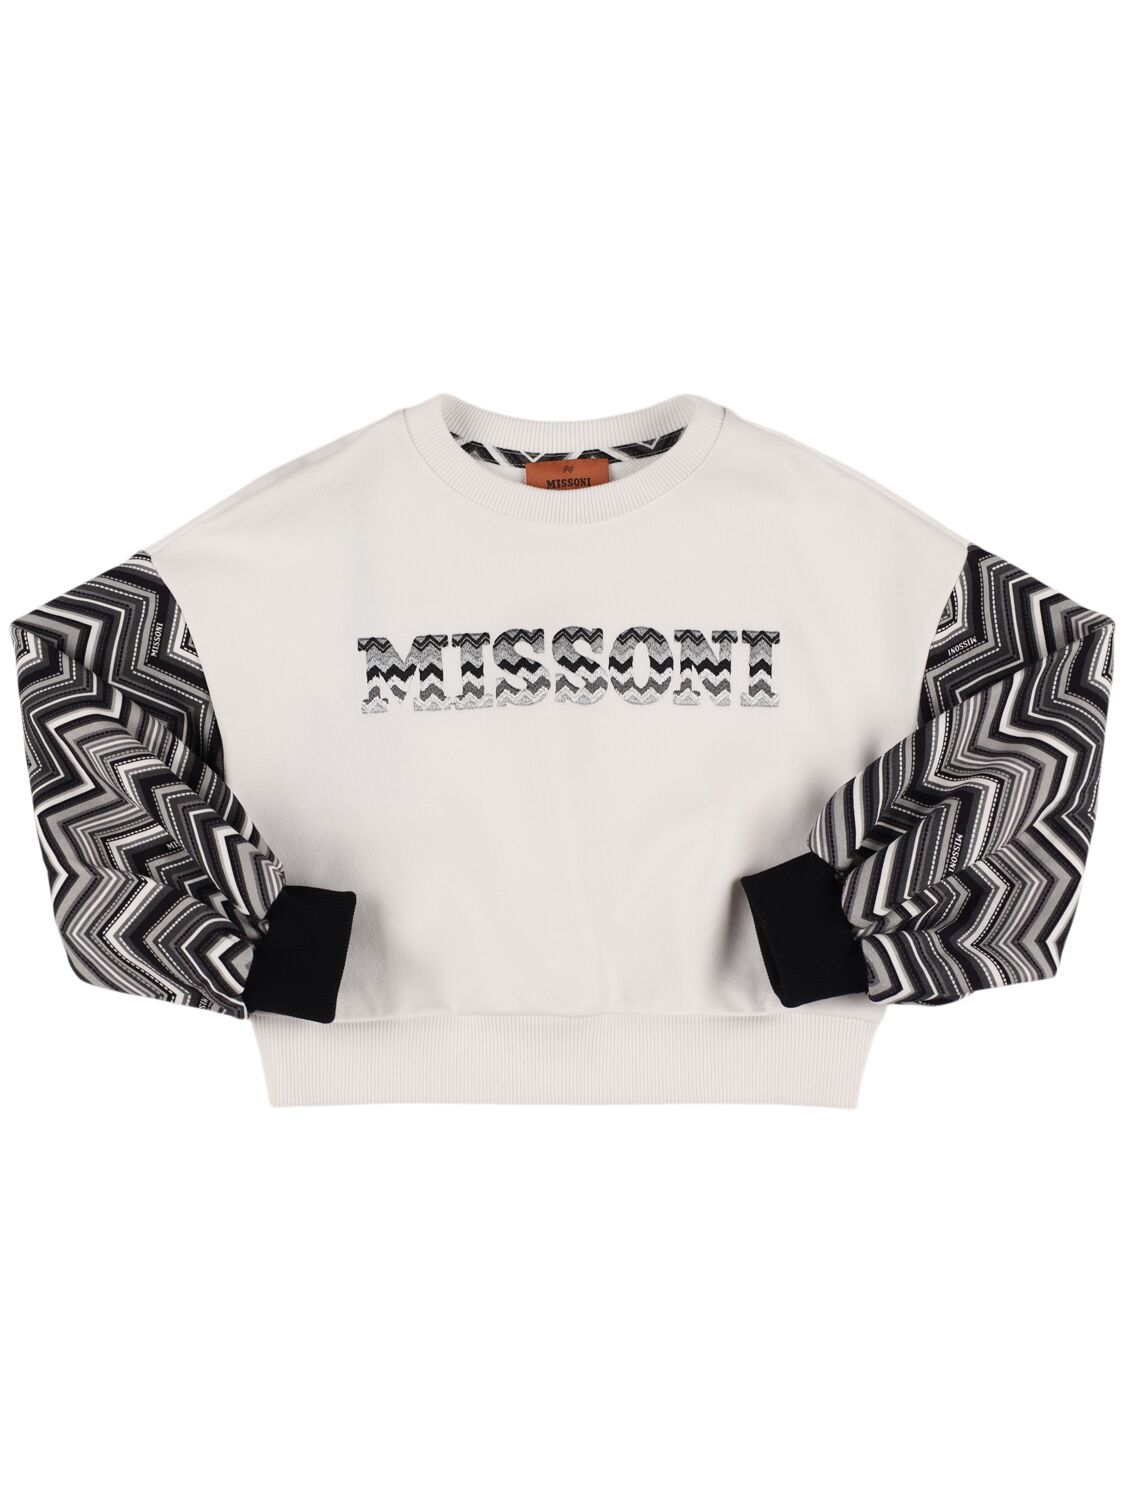 Missoni Kids' Printed Cotton Jersey Sweatshirt In White